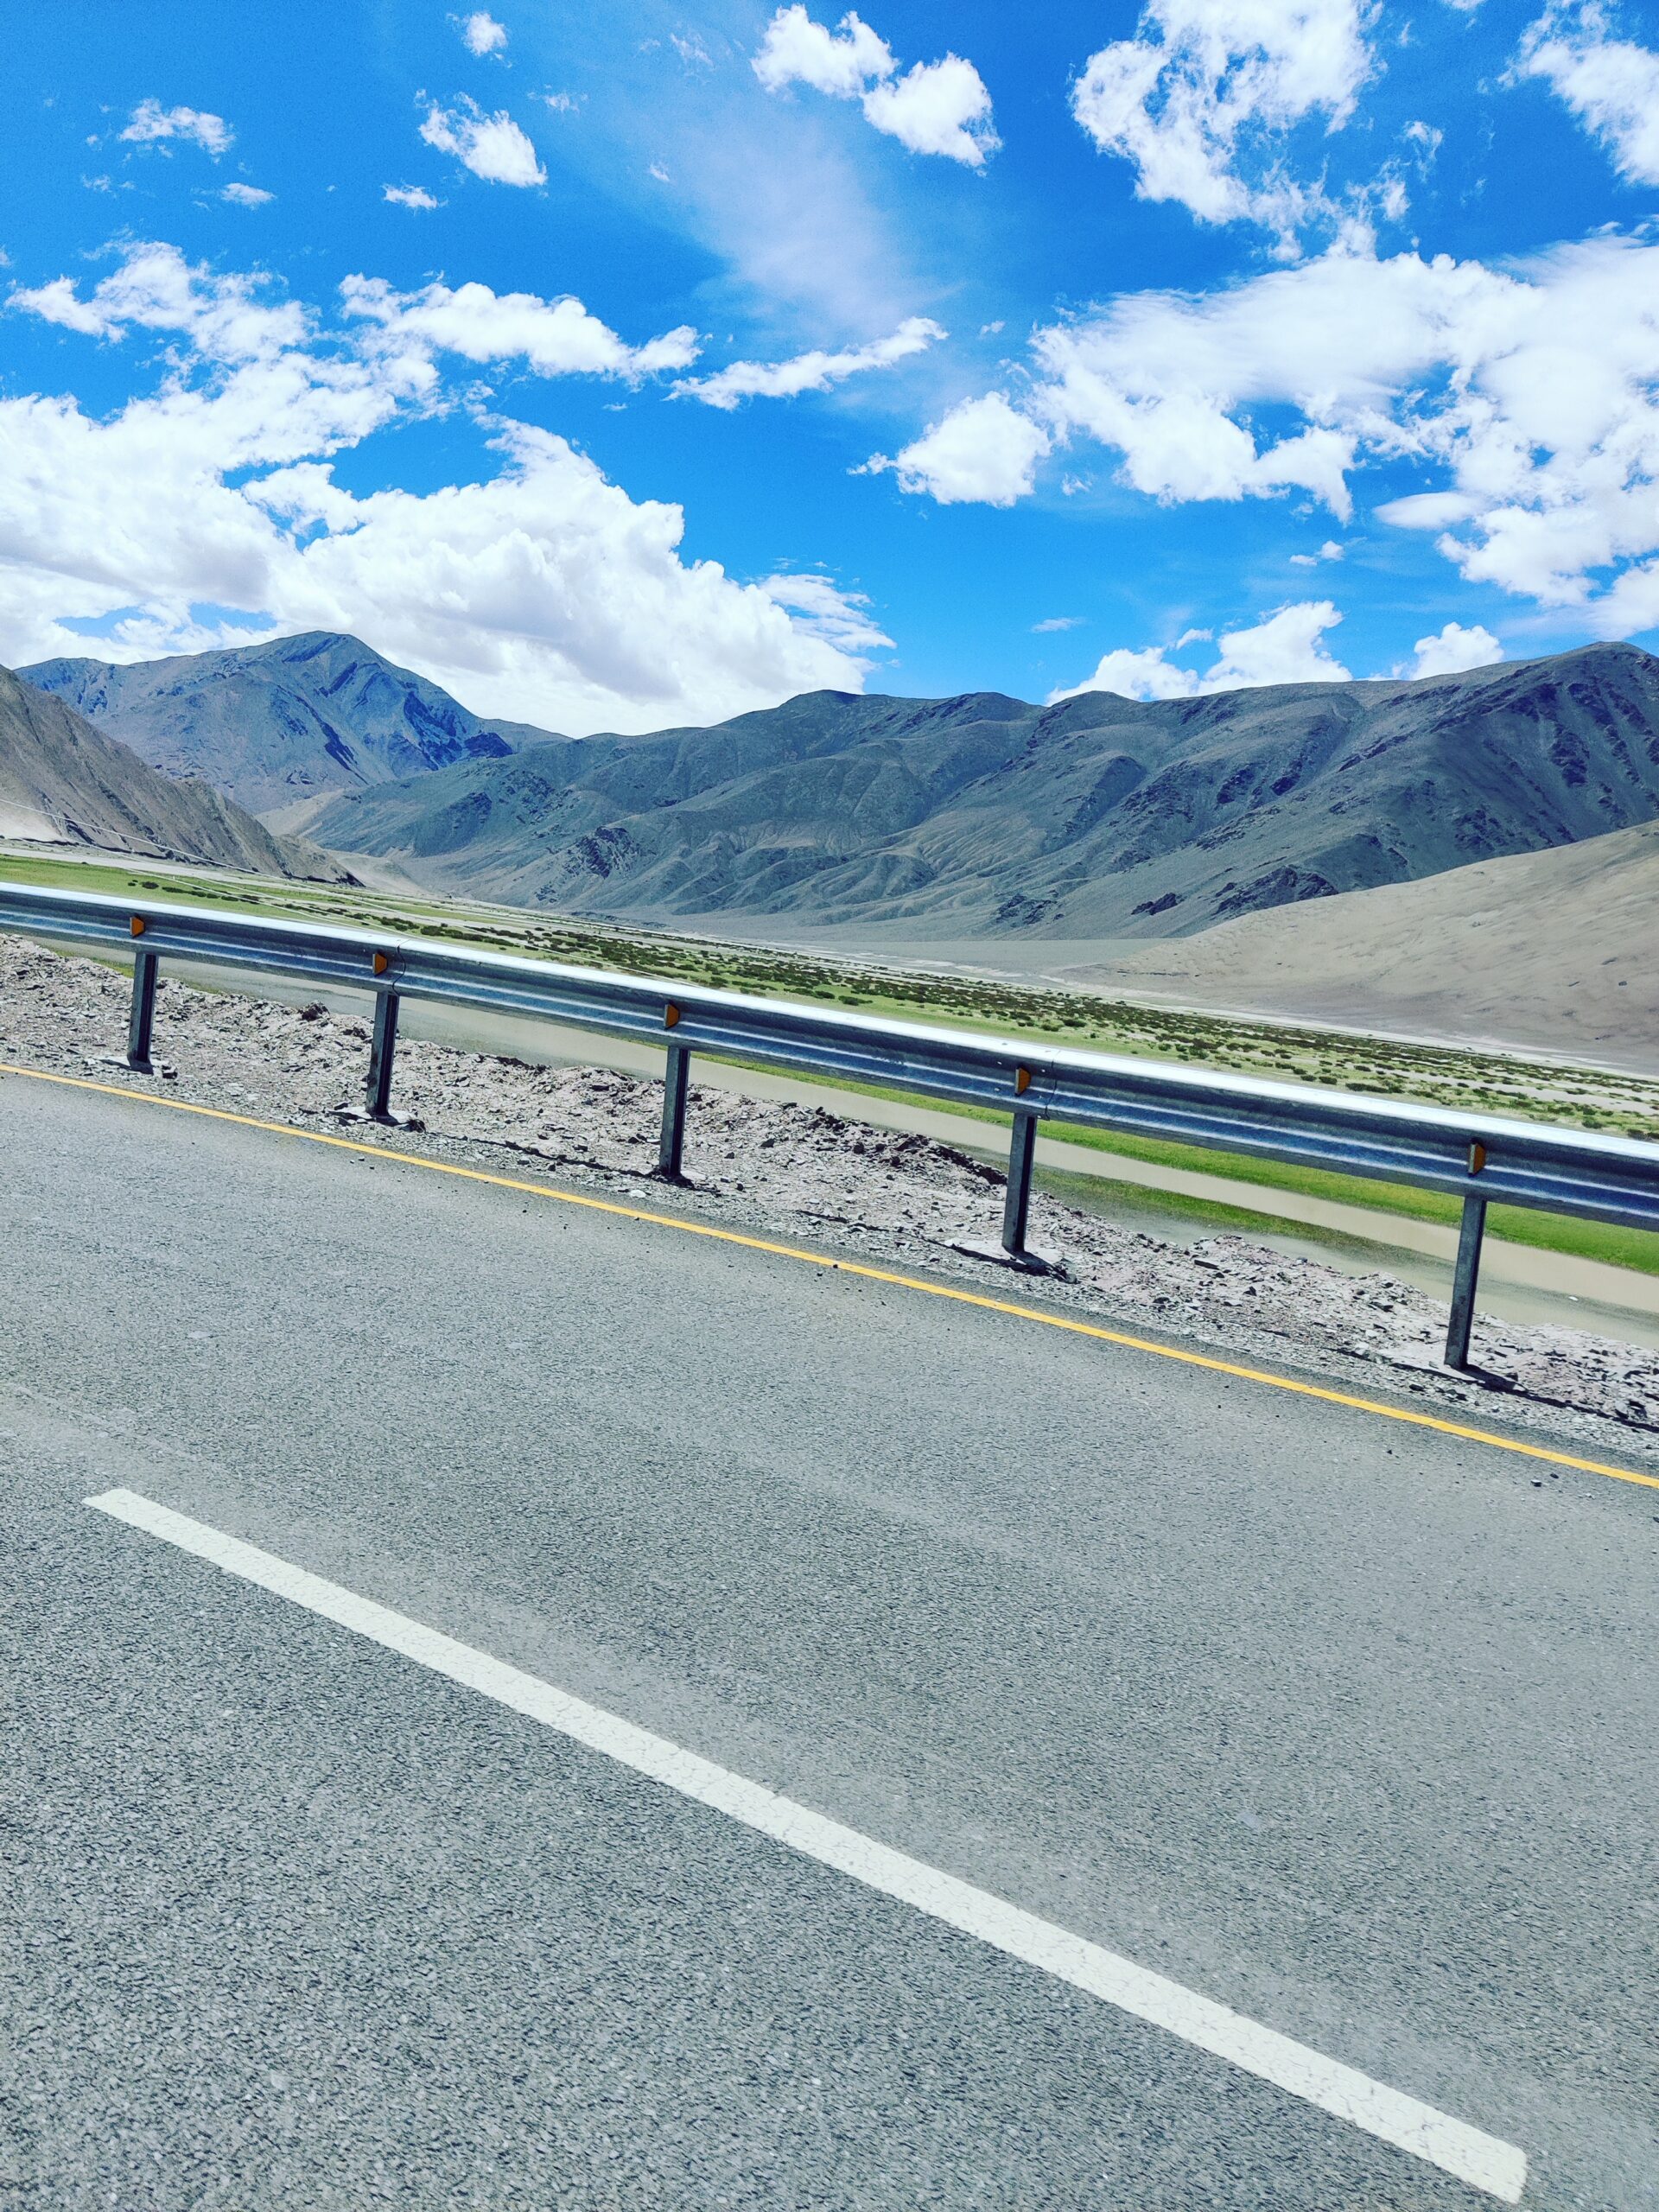 Metalled roads in Ladakh